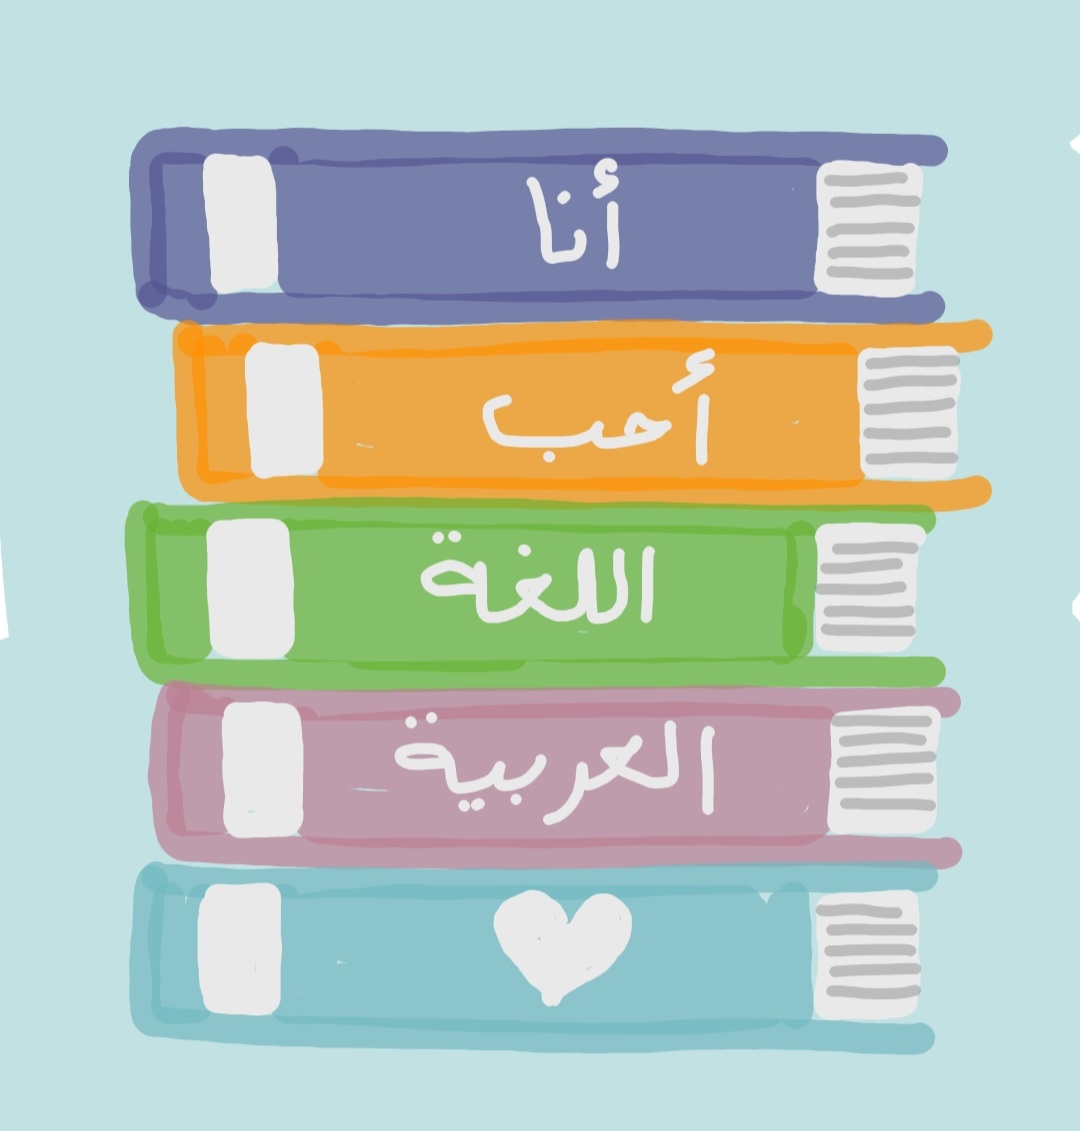 Why Are You Studying Arabic? لماذا تتعلم اللغة العربية؟